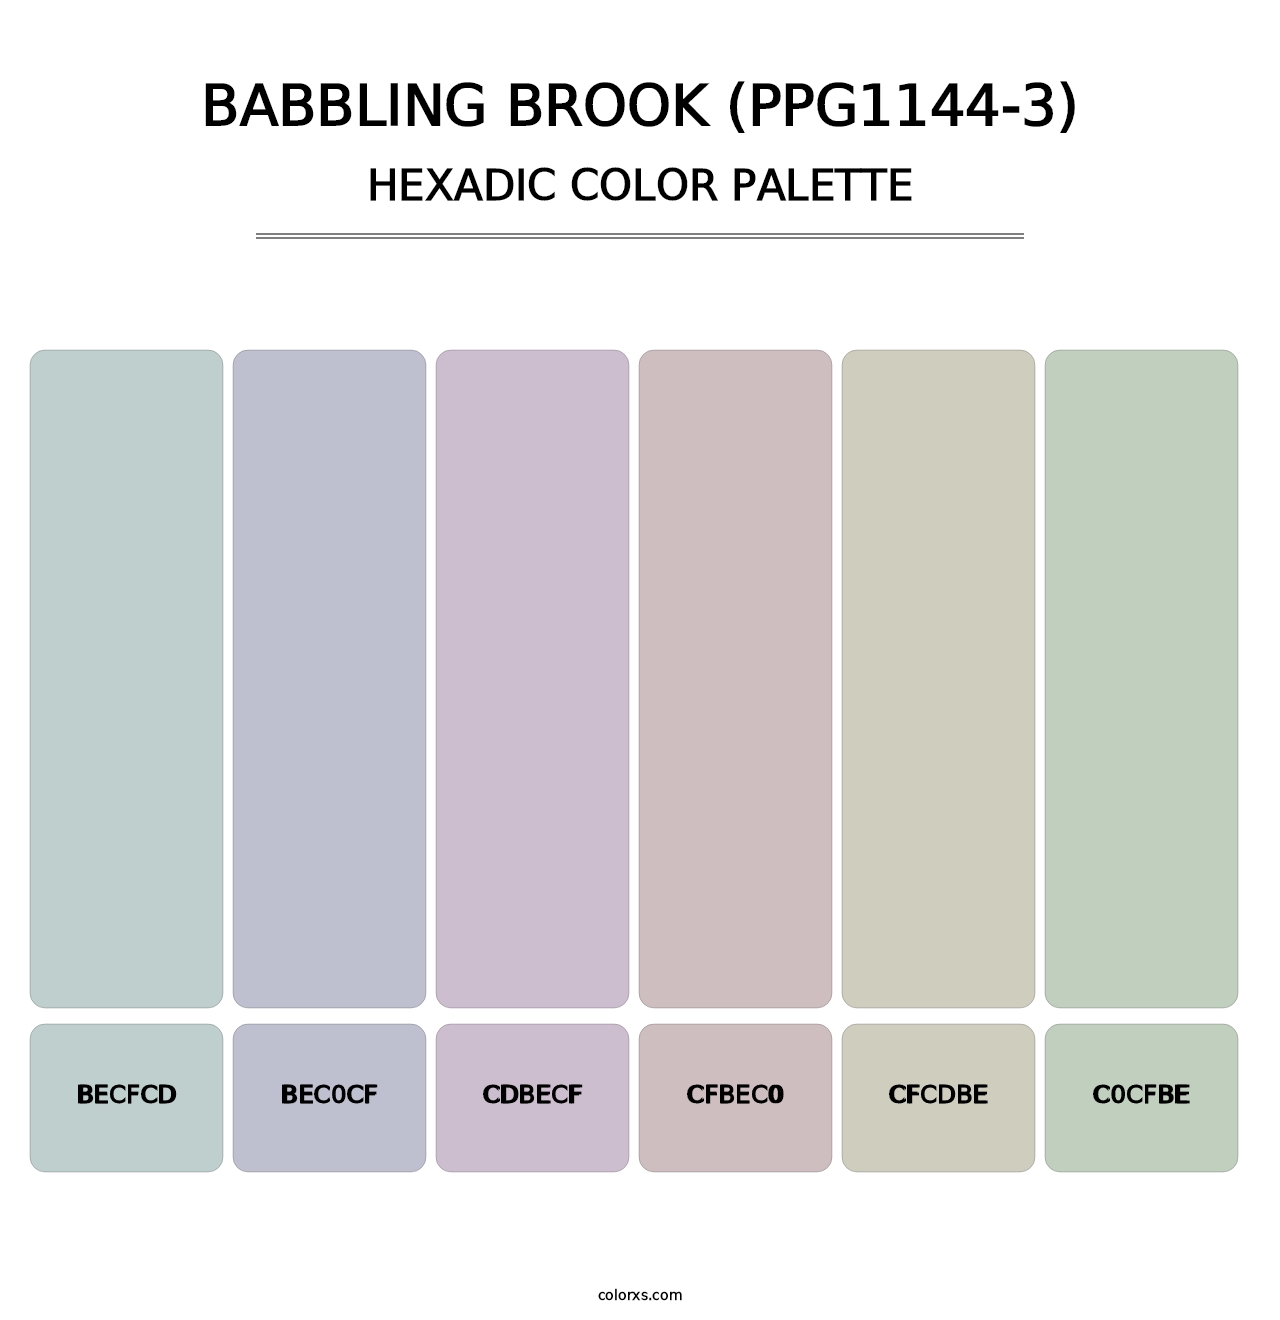 Babbling Brook (PPG1144-3) - Hexadic Color Palette